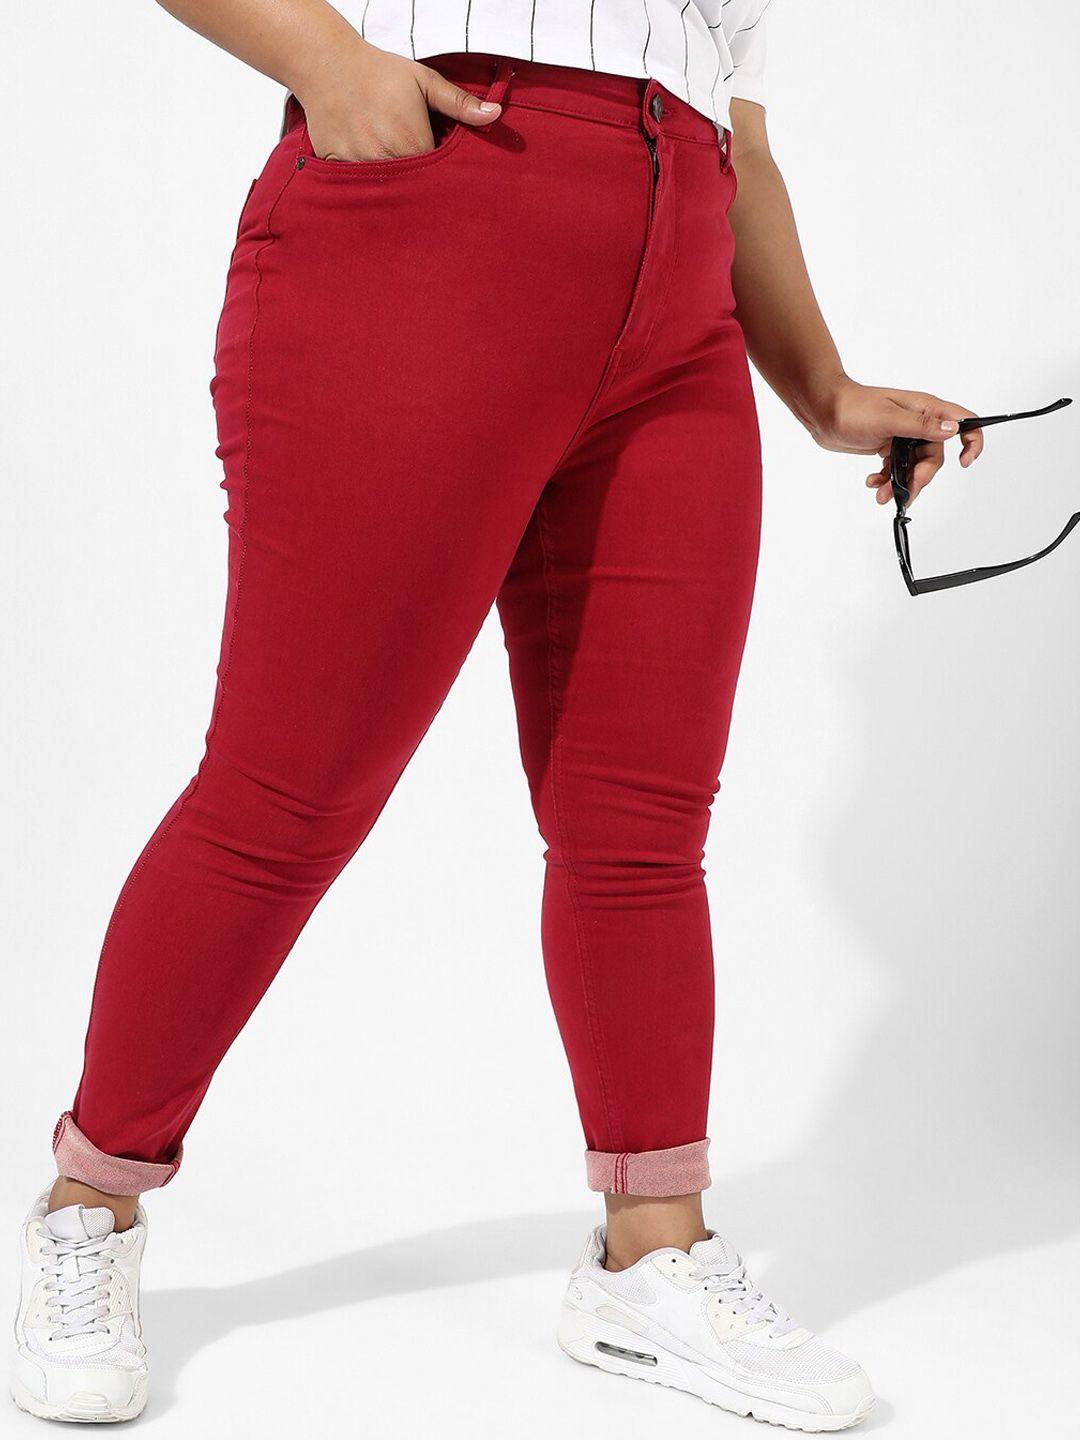 instafab plus plus size women mid-rise jean skinny fit stretchable jeans